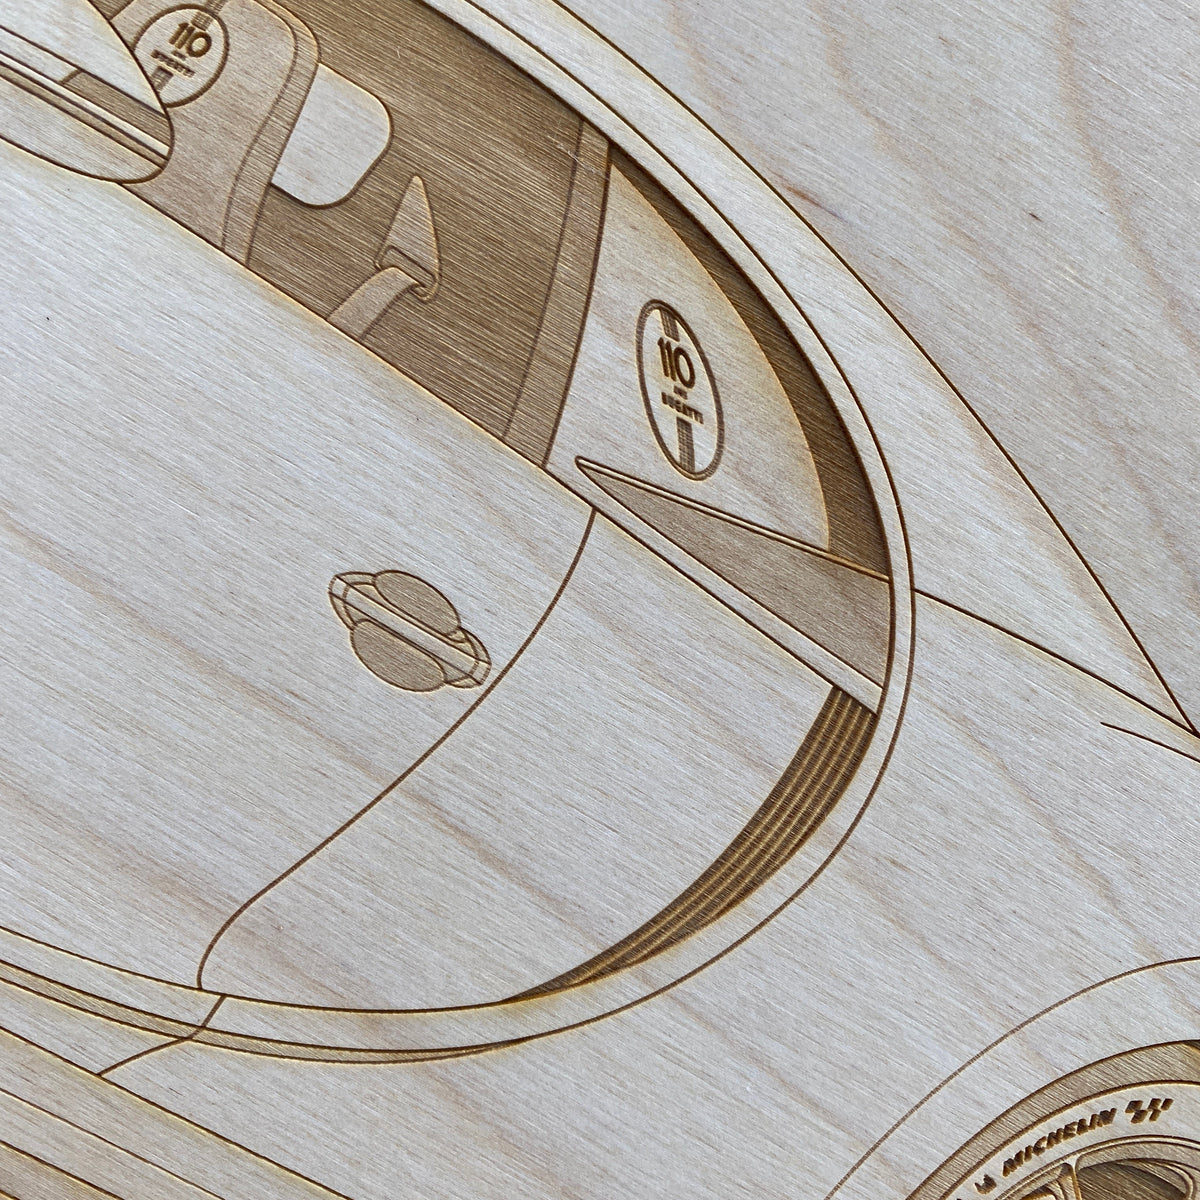 Bugatti Chiron Framed Wood Engraved Artwork